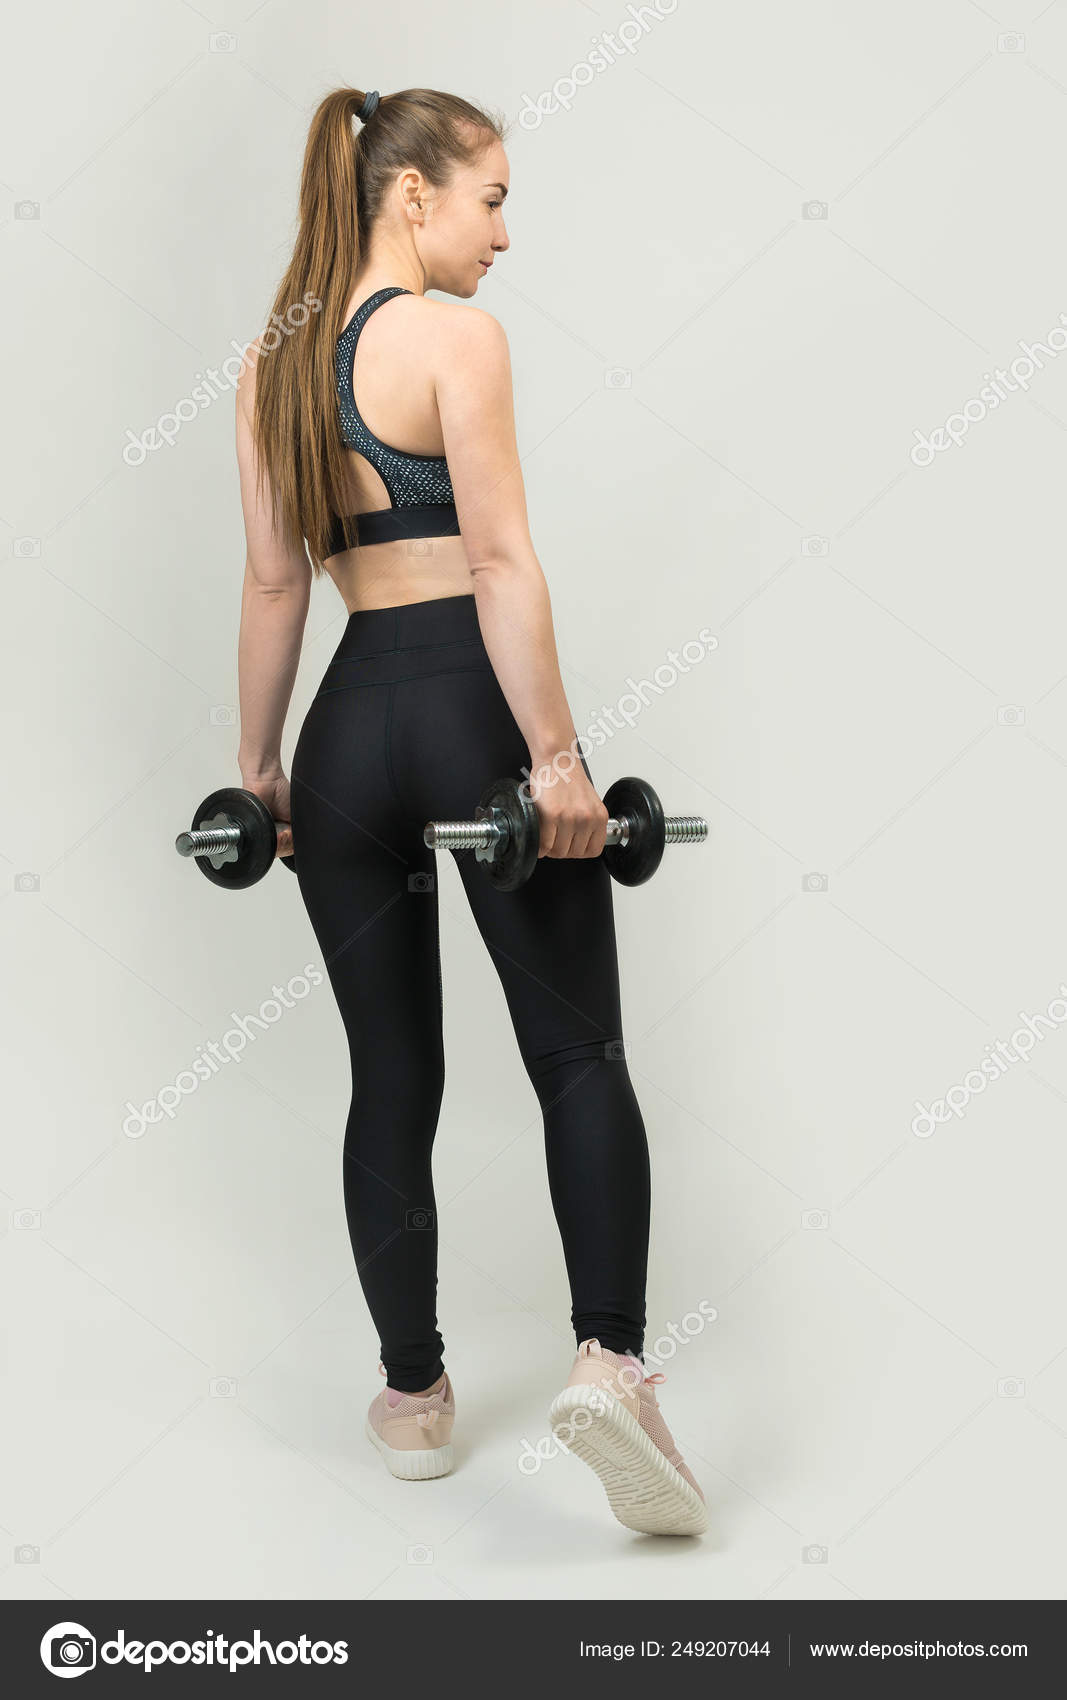 https://st4.depositphotos.com/13132310/24920/i/1600/depositphotos_249207044-stock-photo-slim-fit-fitness-girl-performs.jpg